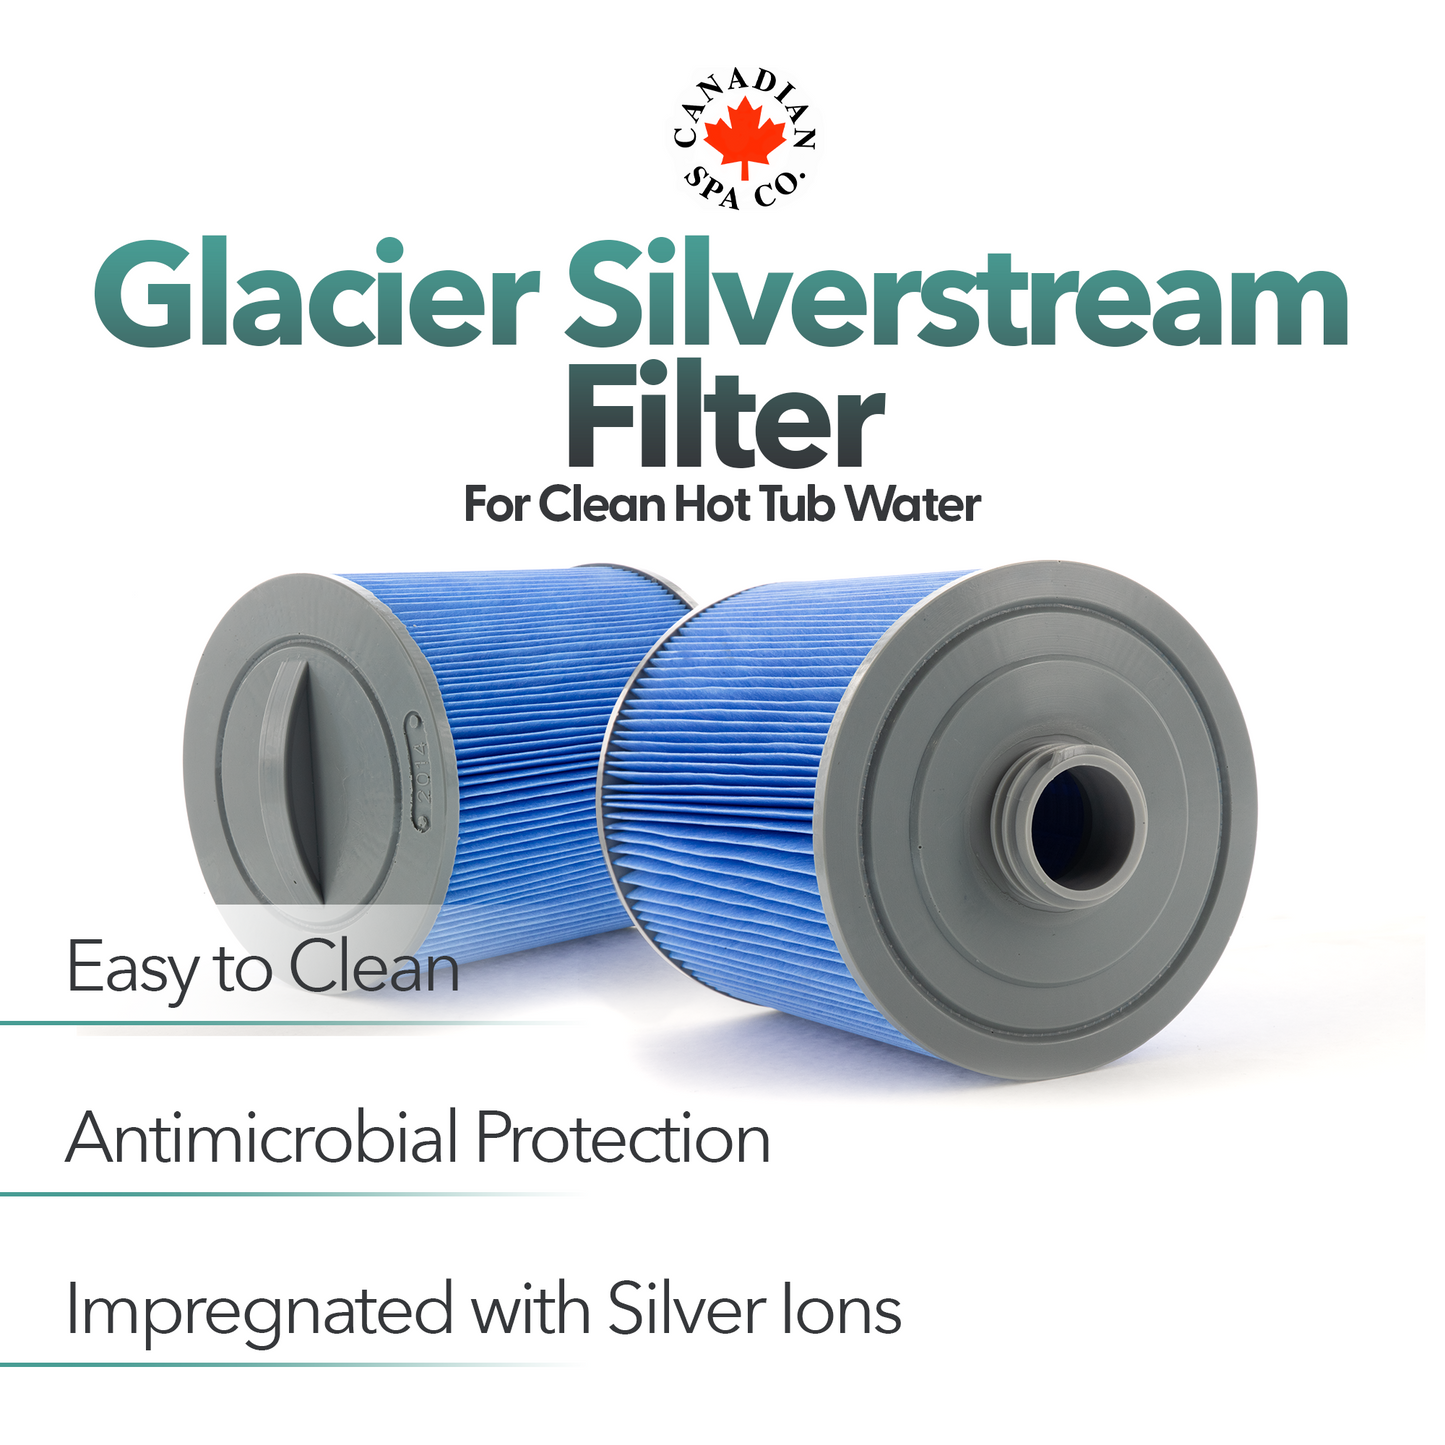 Glacier Filter Single - Antimicrobial